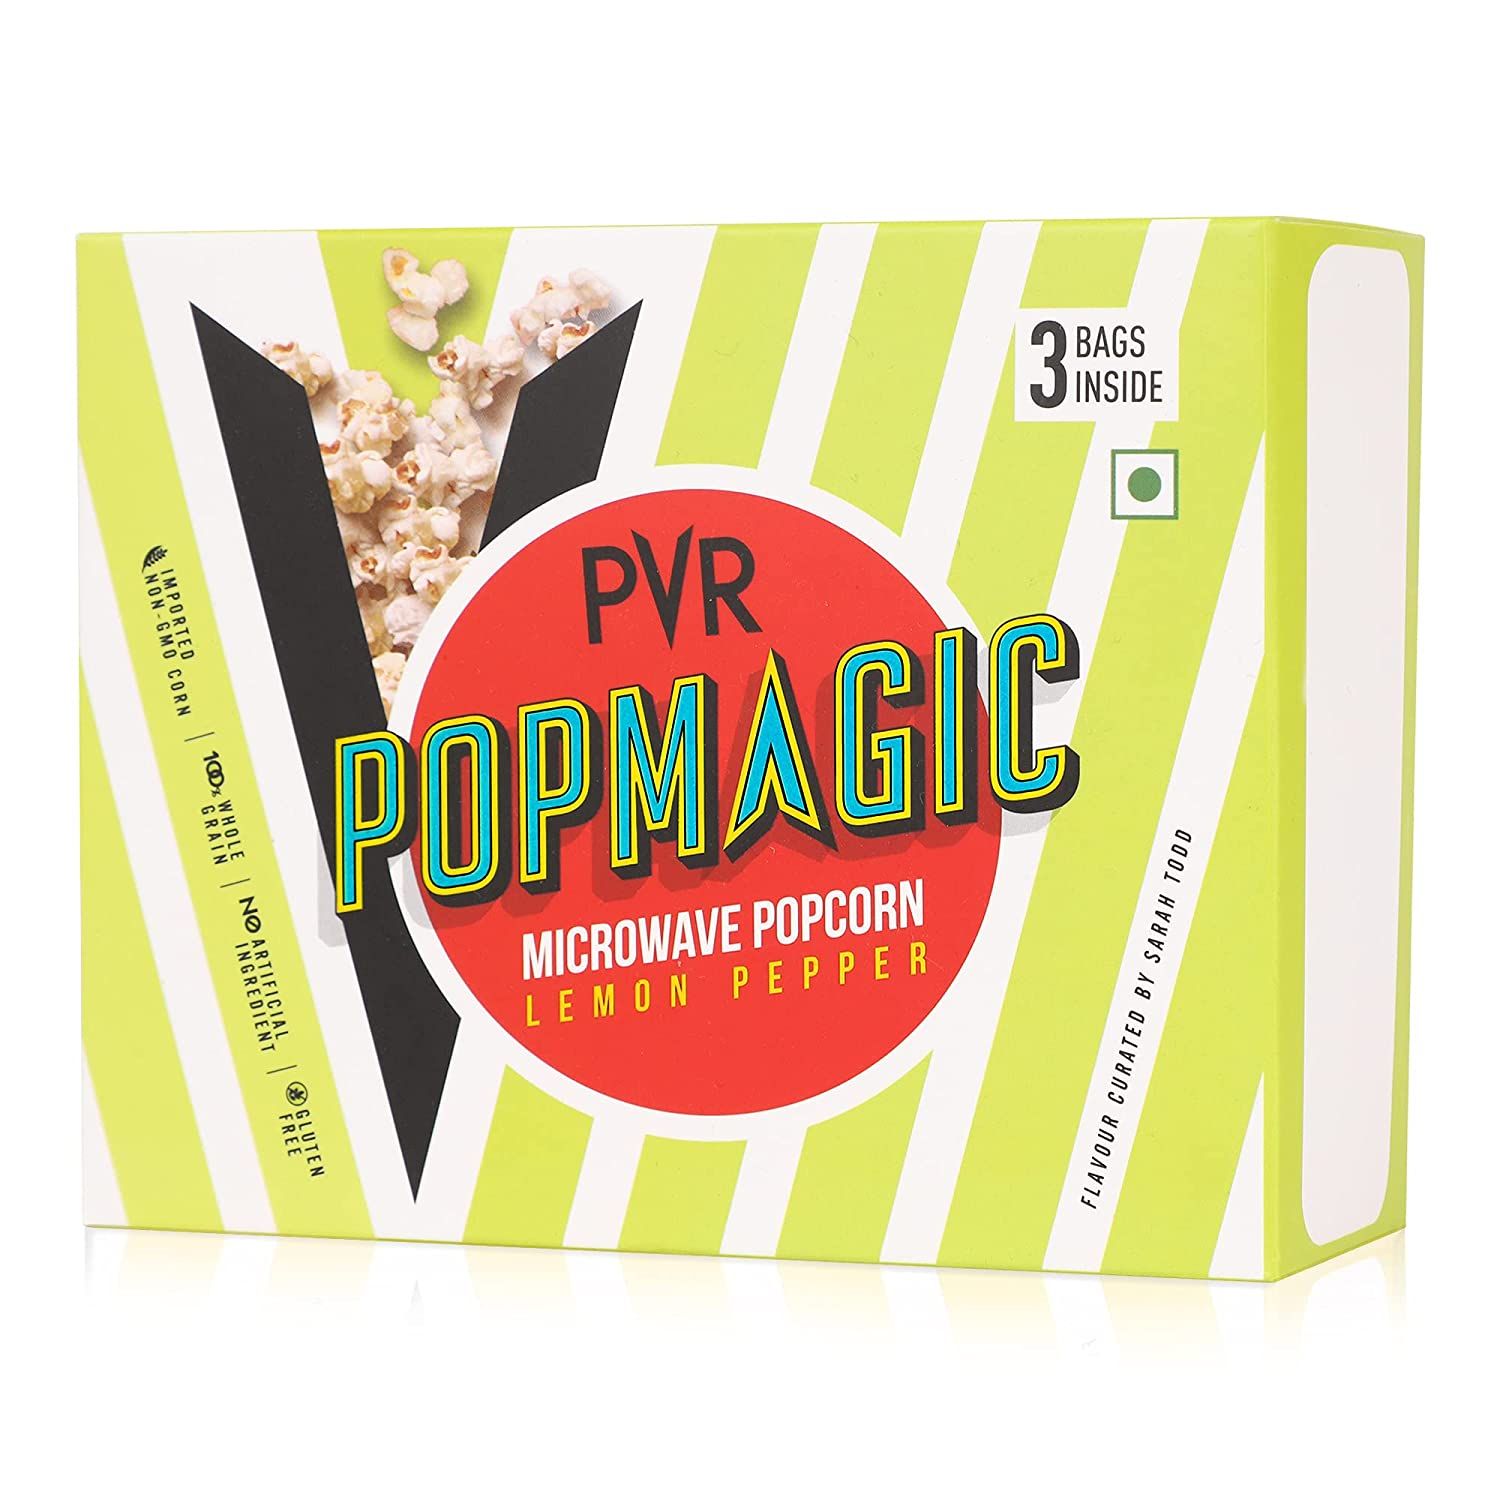 PVR PopMagic  Microwave Popcorn Lemon Pepper Image